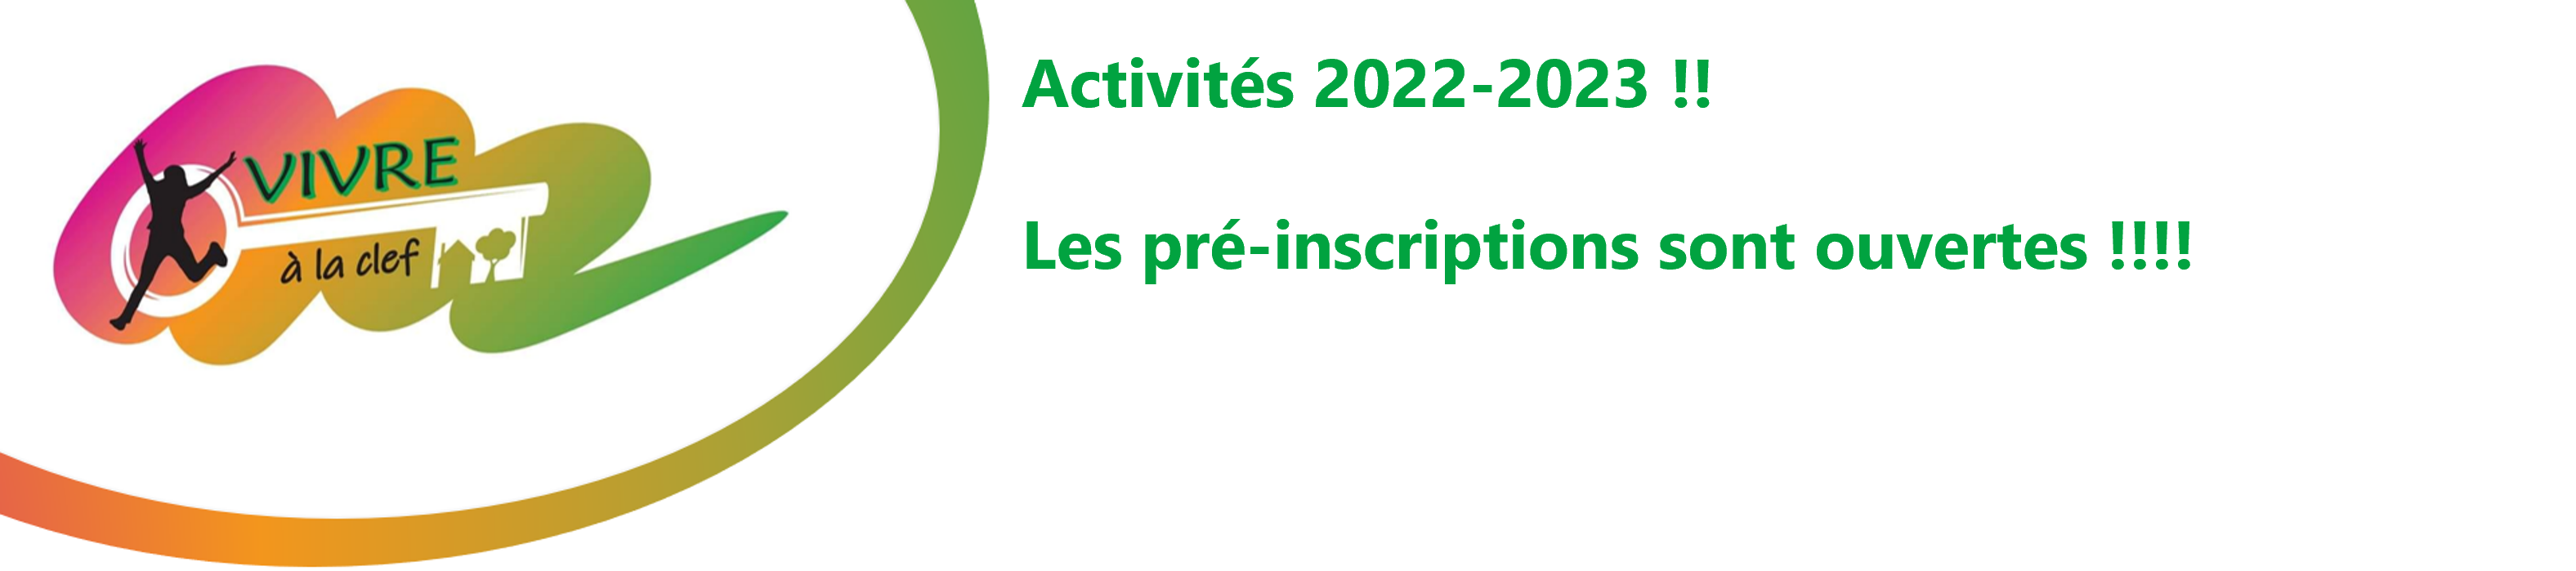 activitees 2022 2023